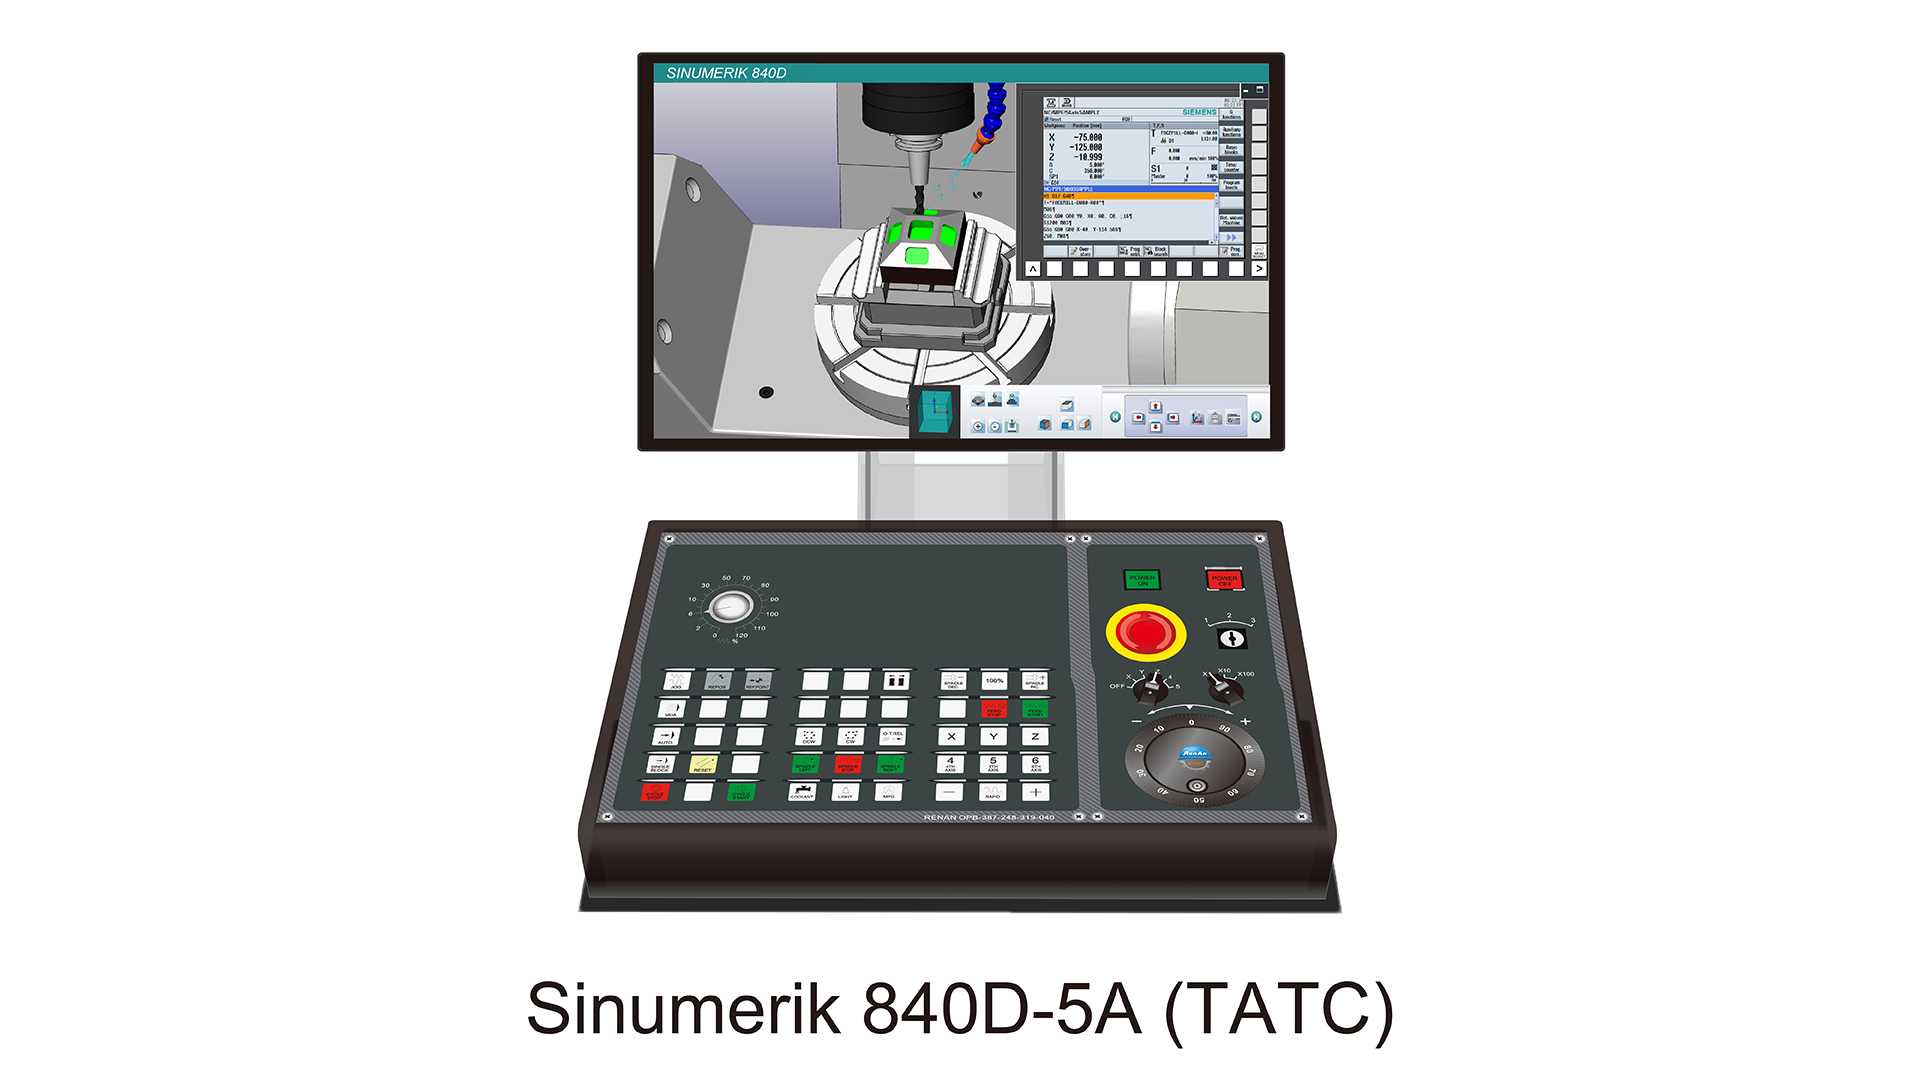 CNC Operation Simulation Workstation